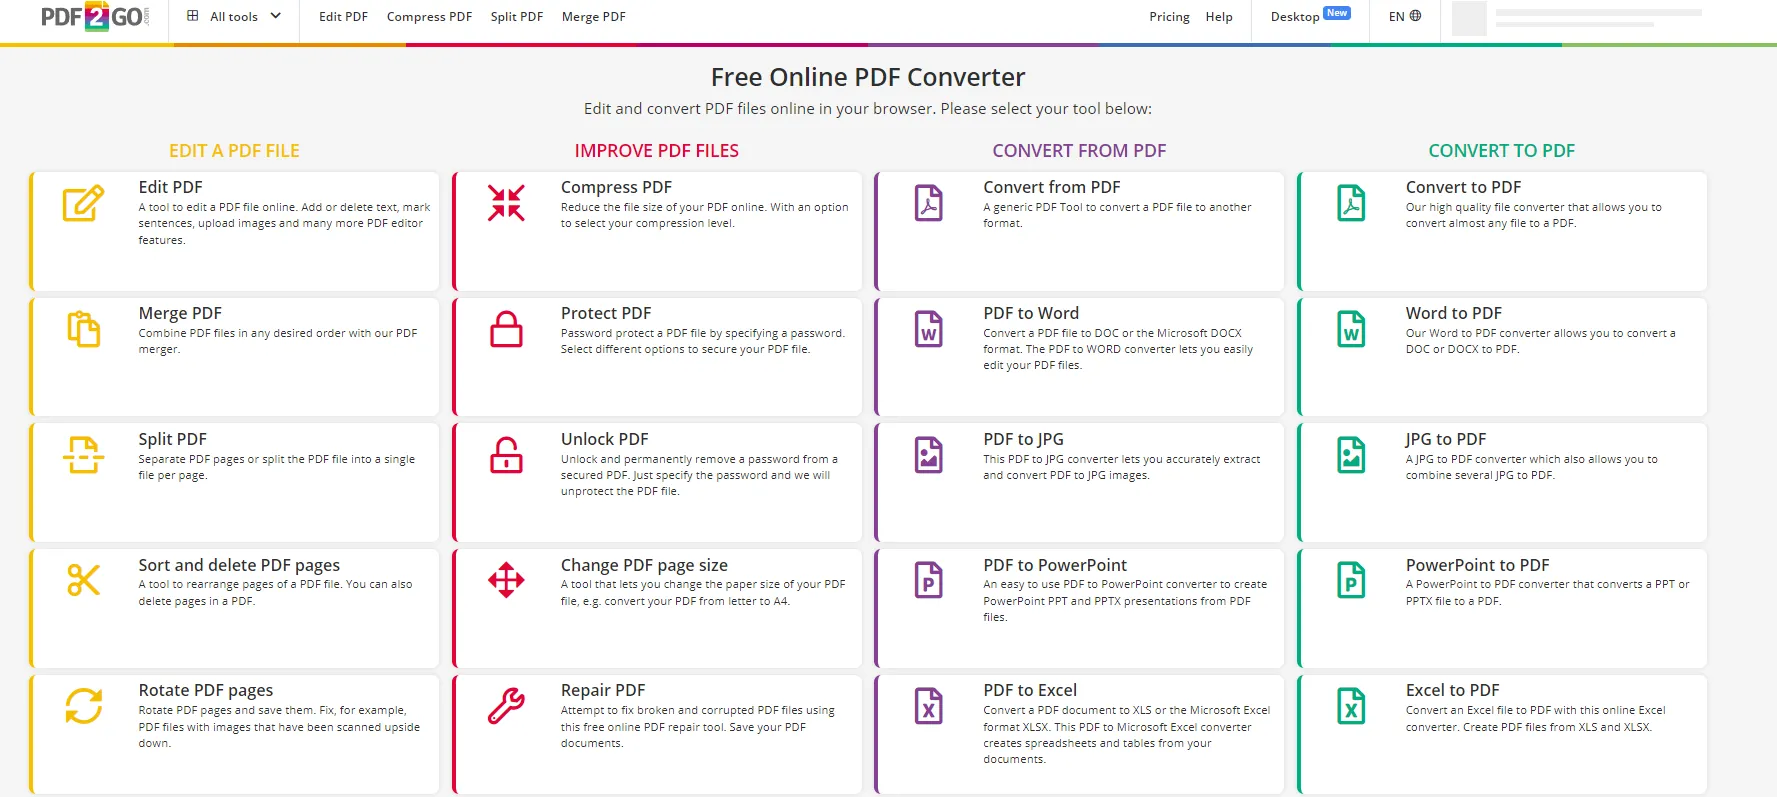 pdf to excel converter pdf2go